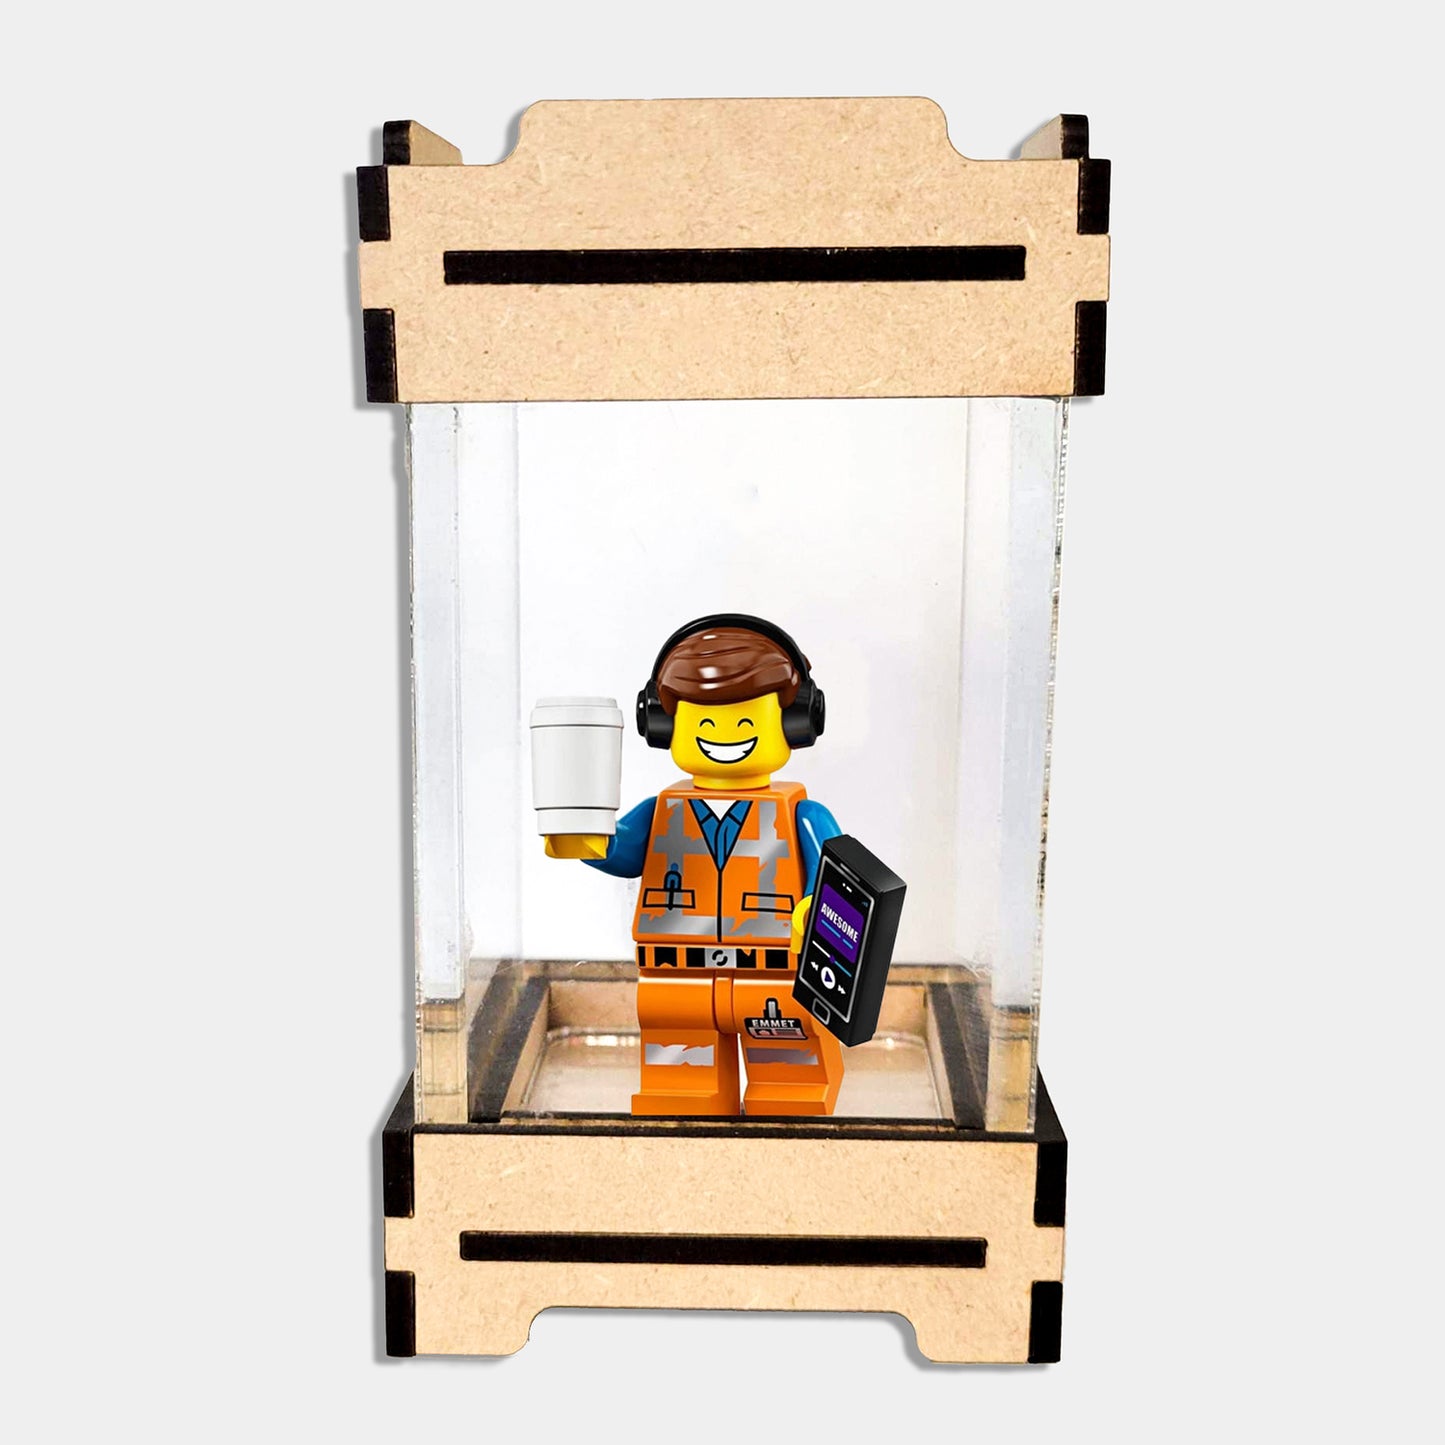 Small Stackable Display Case - Memorabilia or Miniature Toy Display